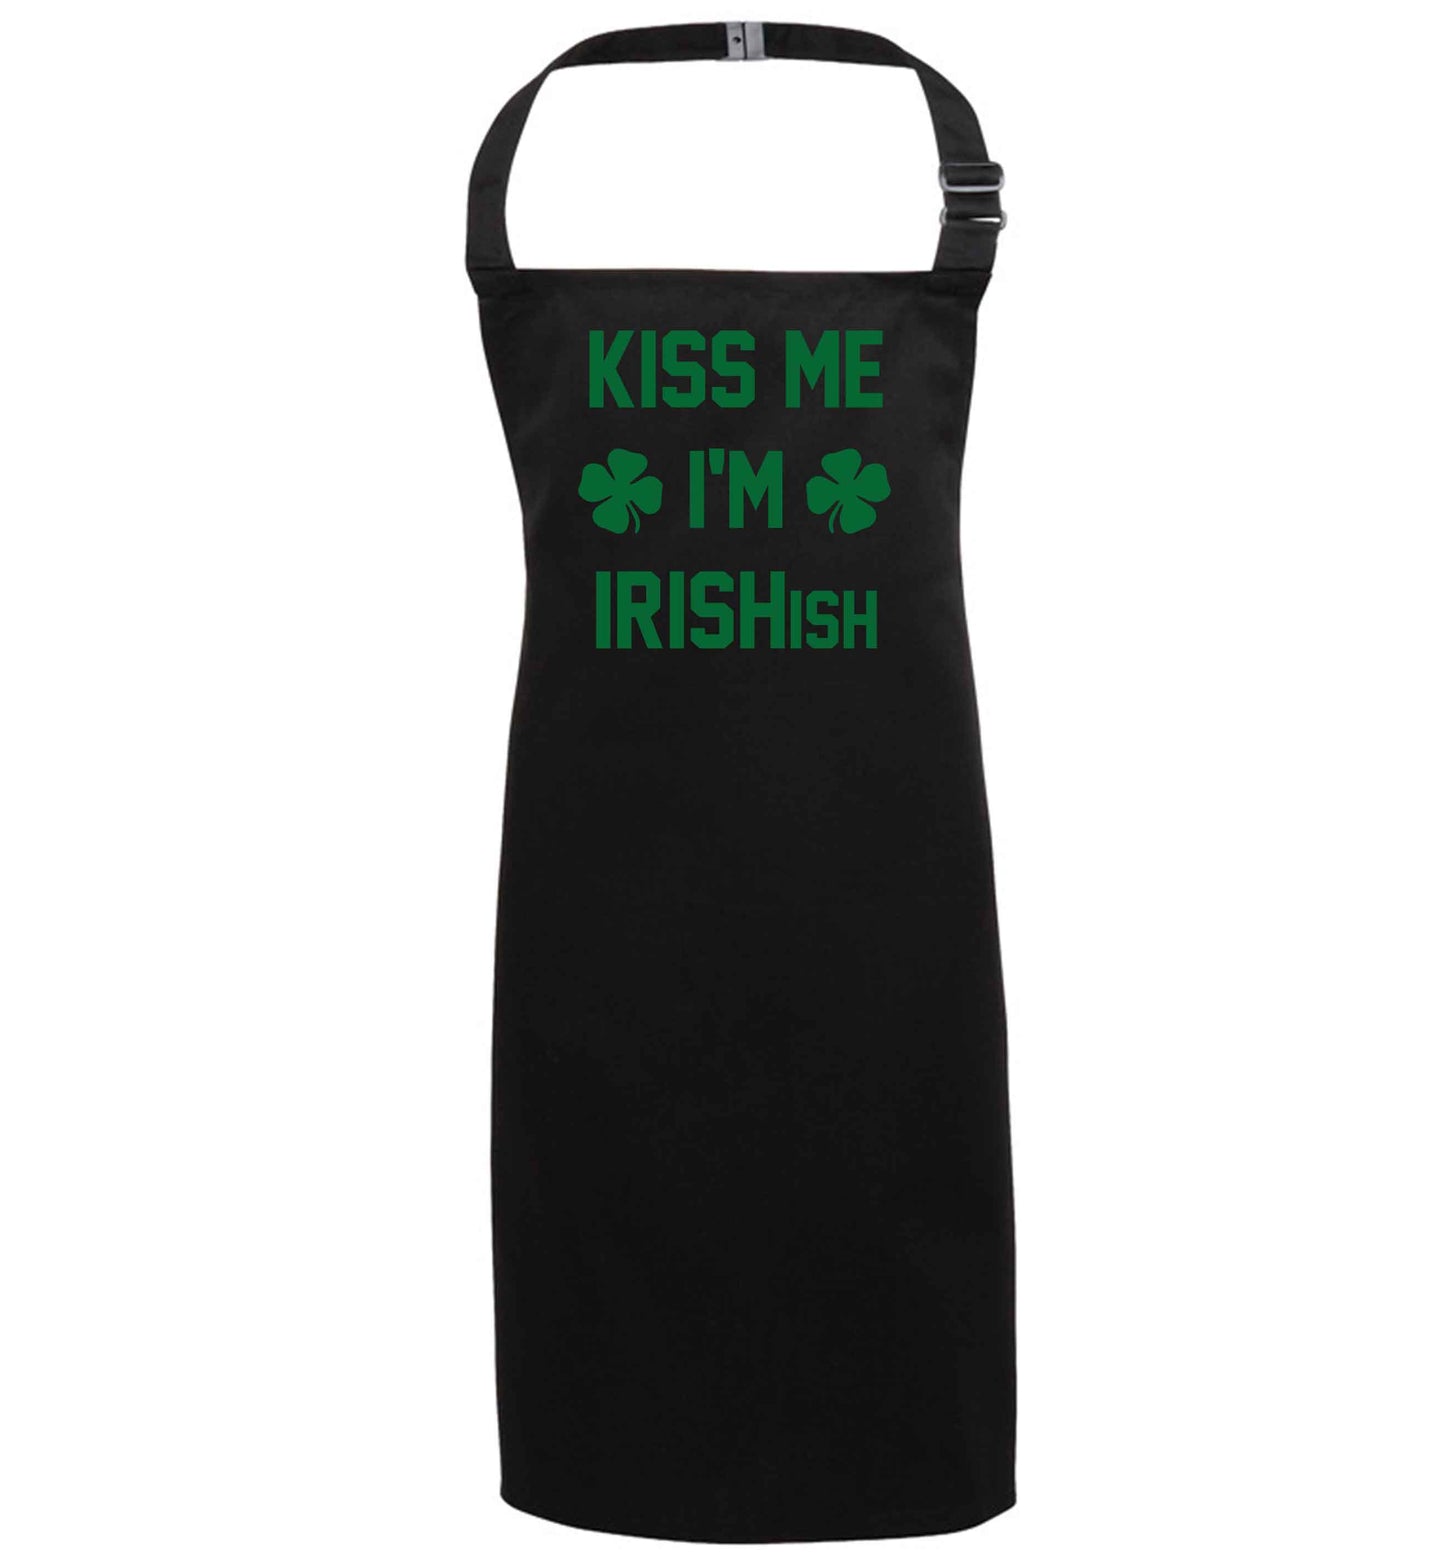 Kiss me I'm Irishish black apron 7-10 years